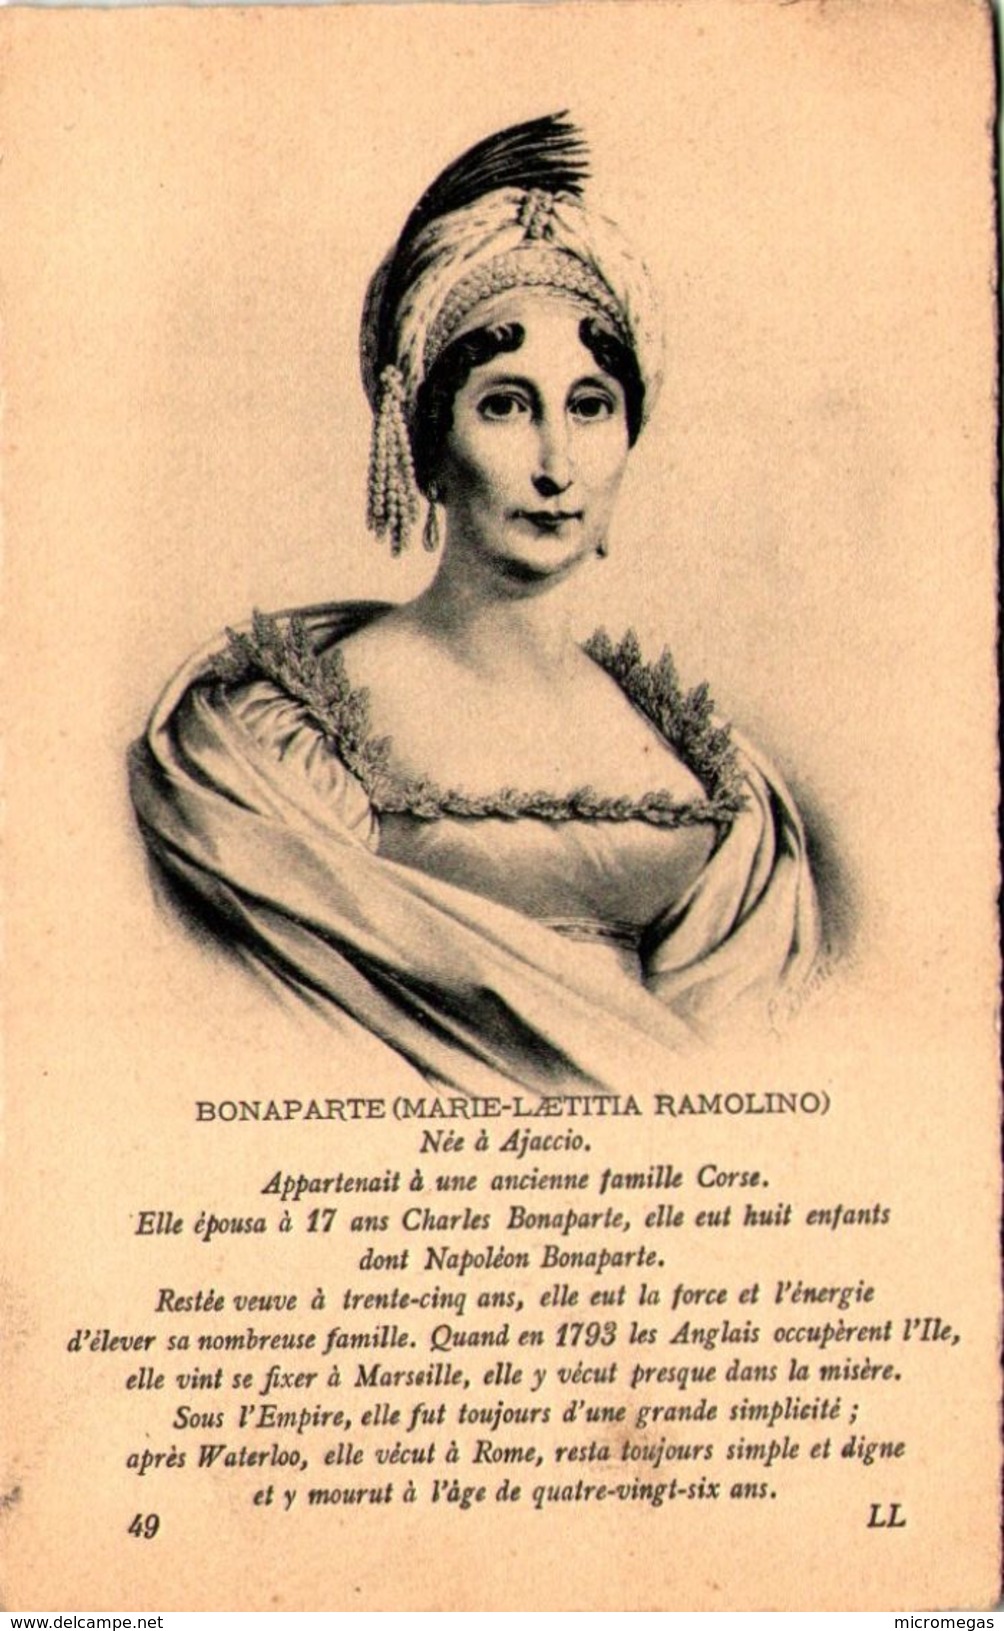 Bonaparte (Marie-Laetitia Ramolino) - History